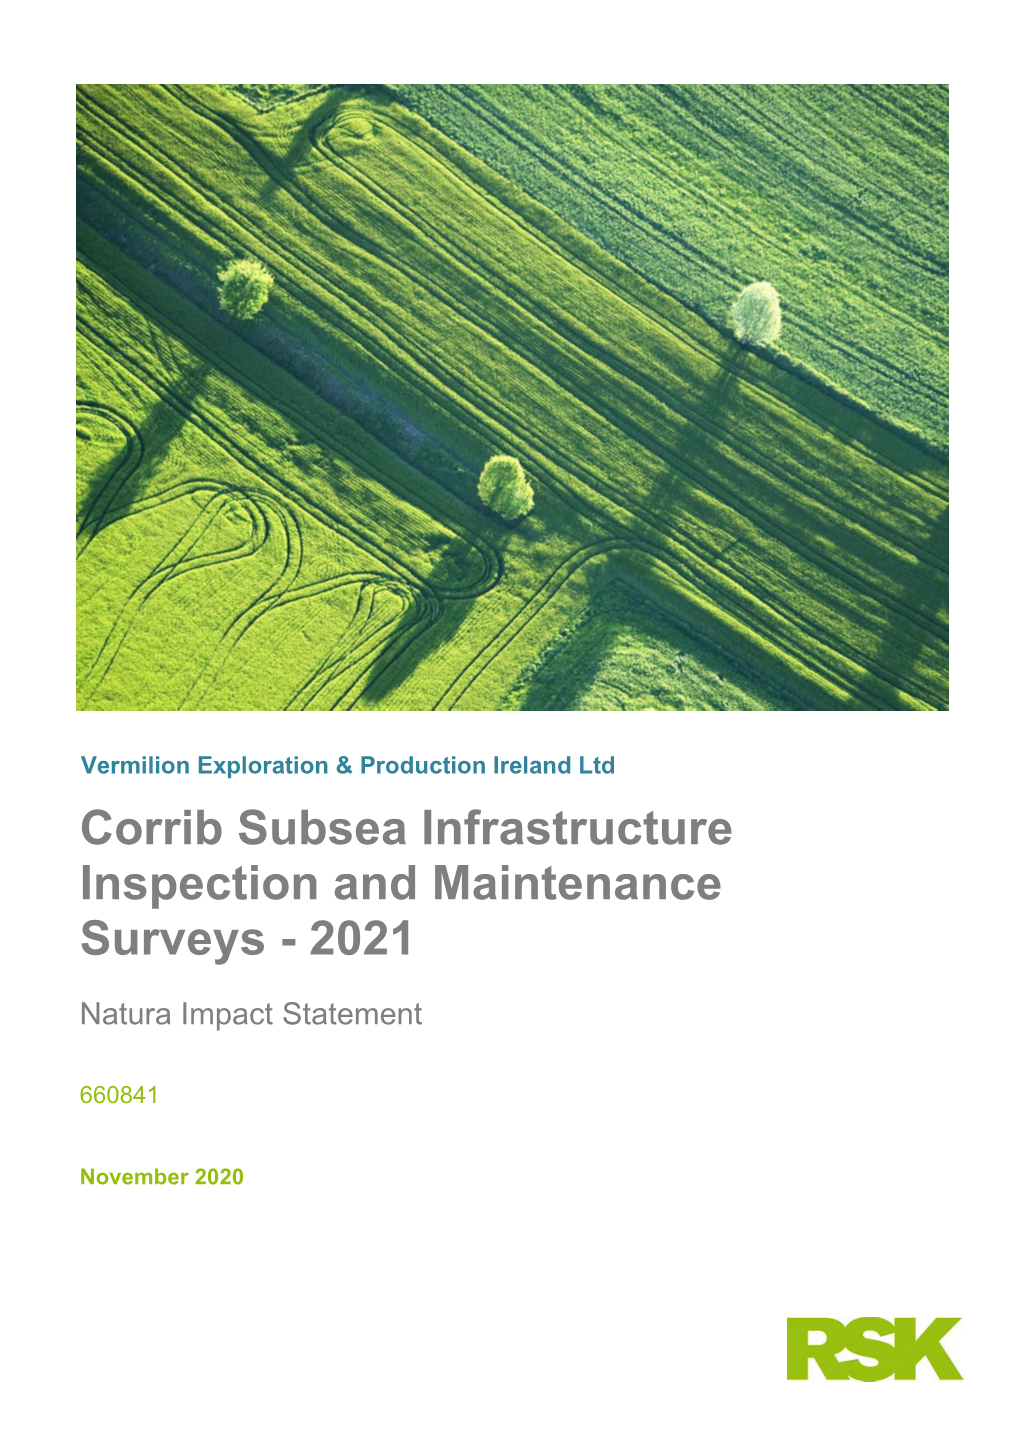 Corrib Subsea Infrastructure Inspection and Maintenance Surveys - 2021